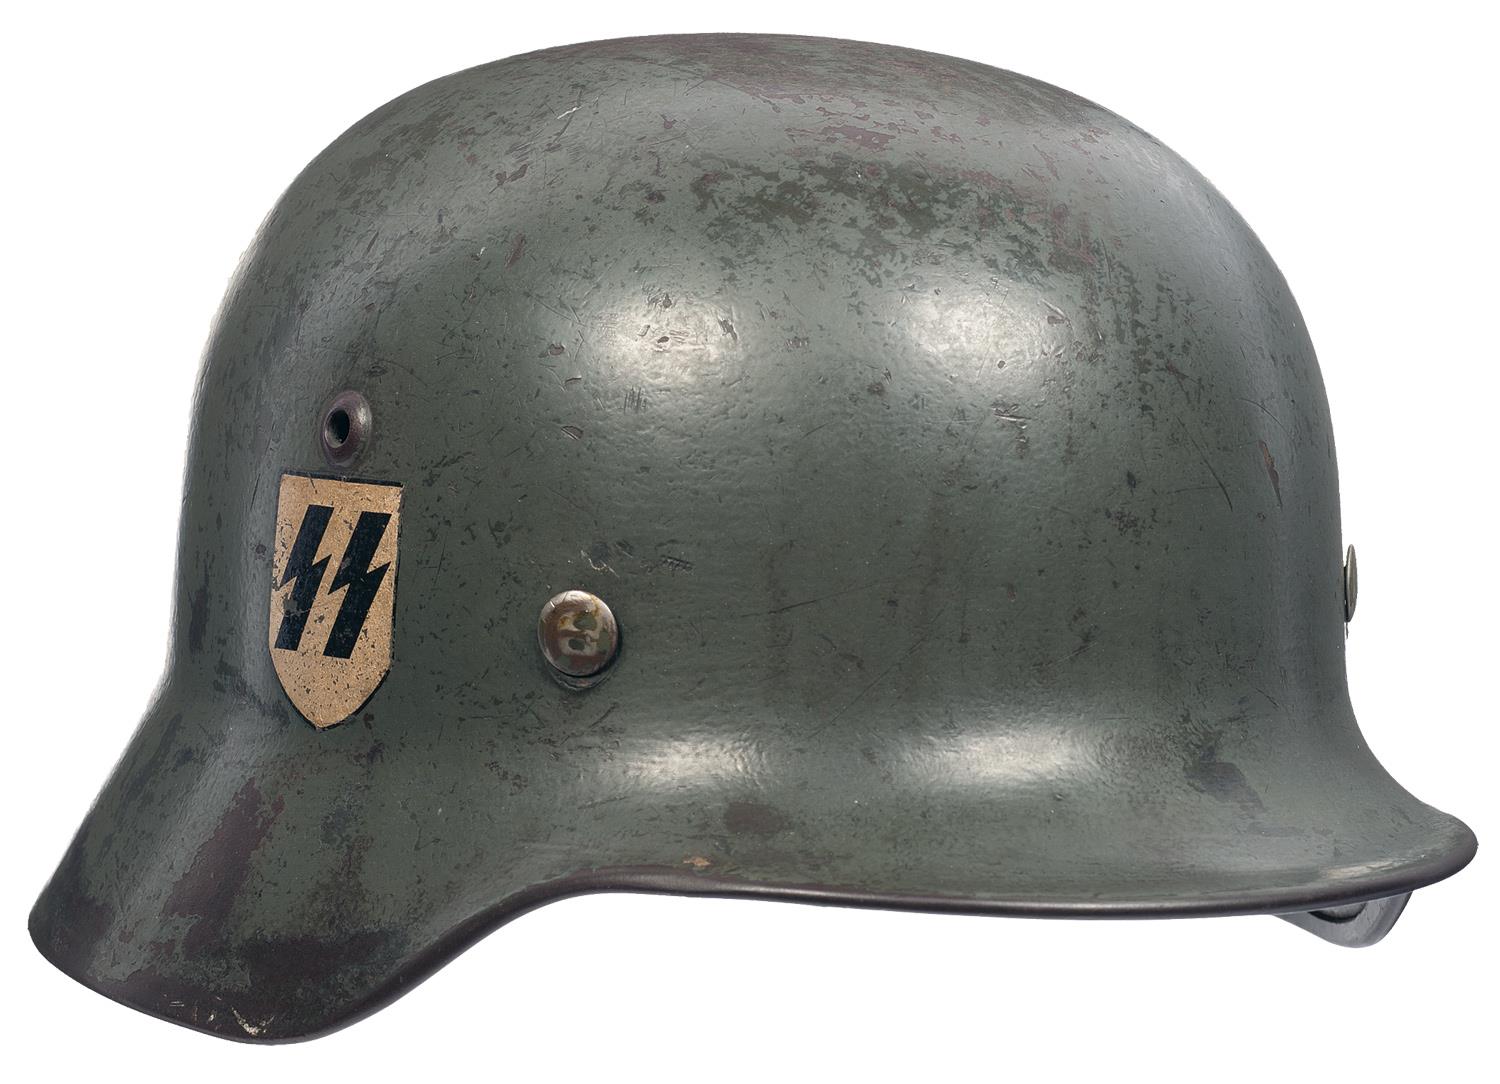 Сс 35. Каска m35 Вермахт. Stahlhelm SS. Немецкая каска СС. German m35 SS Helmet.